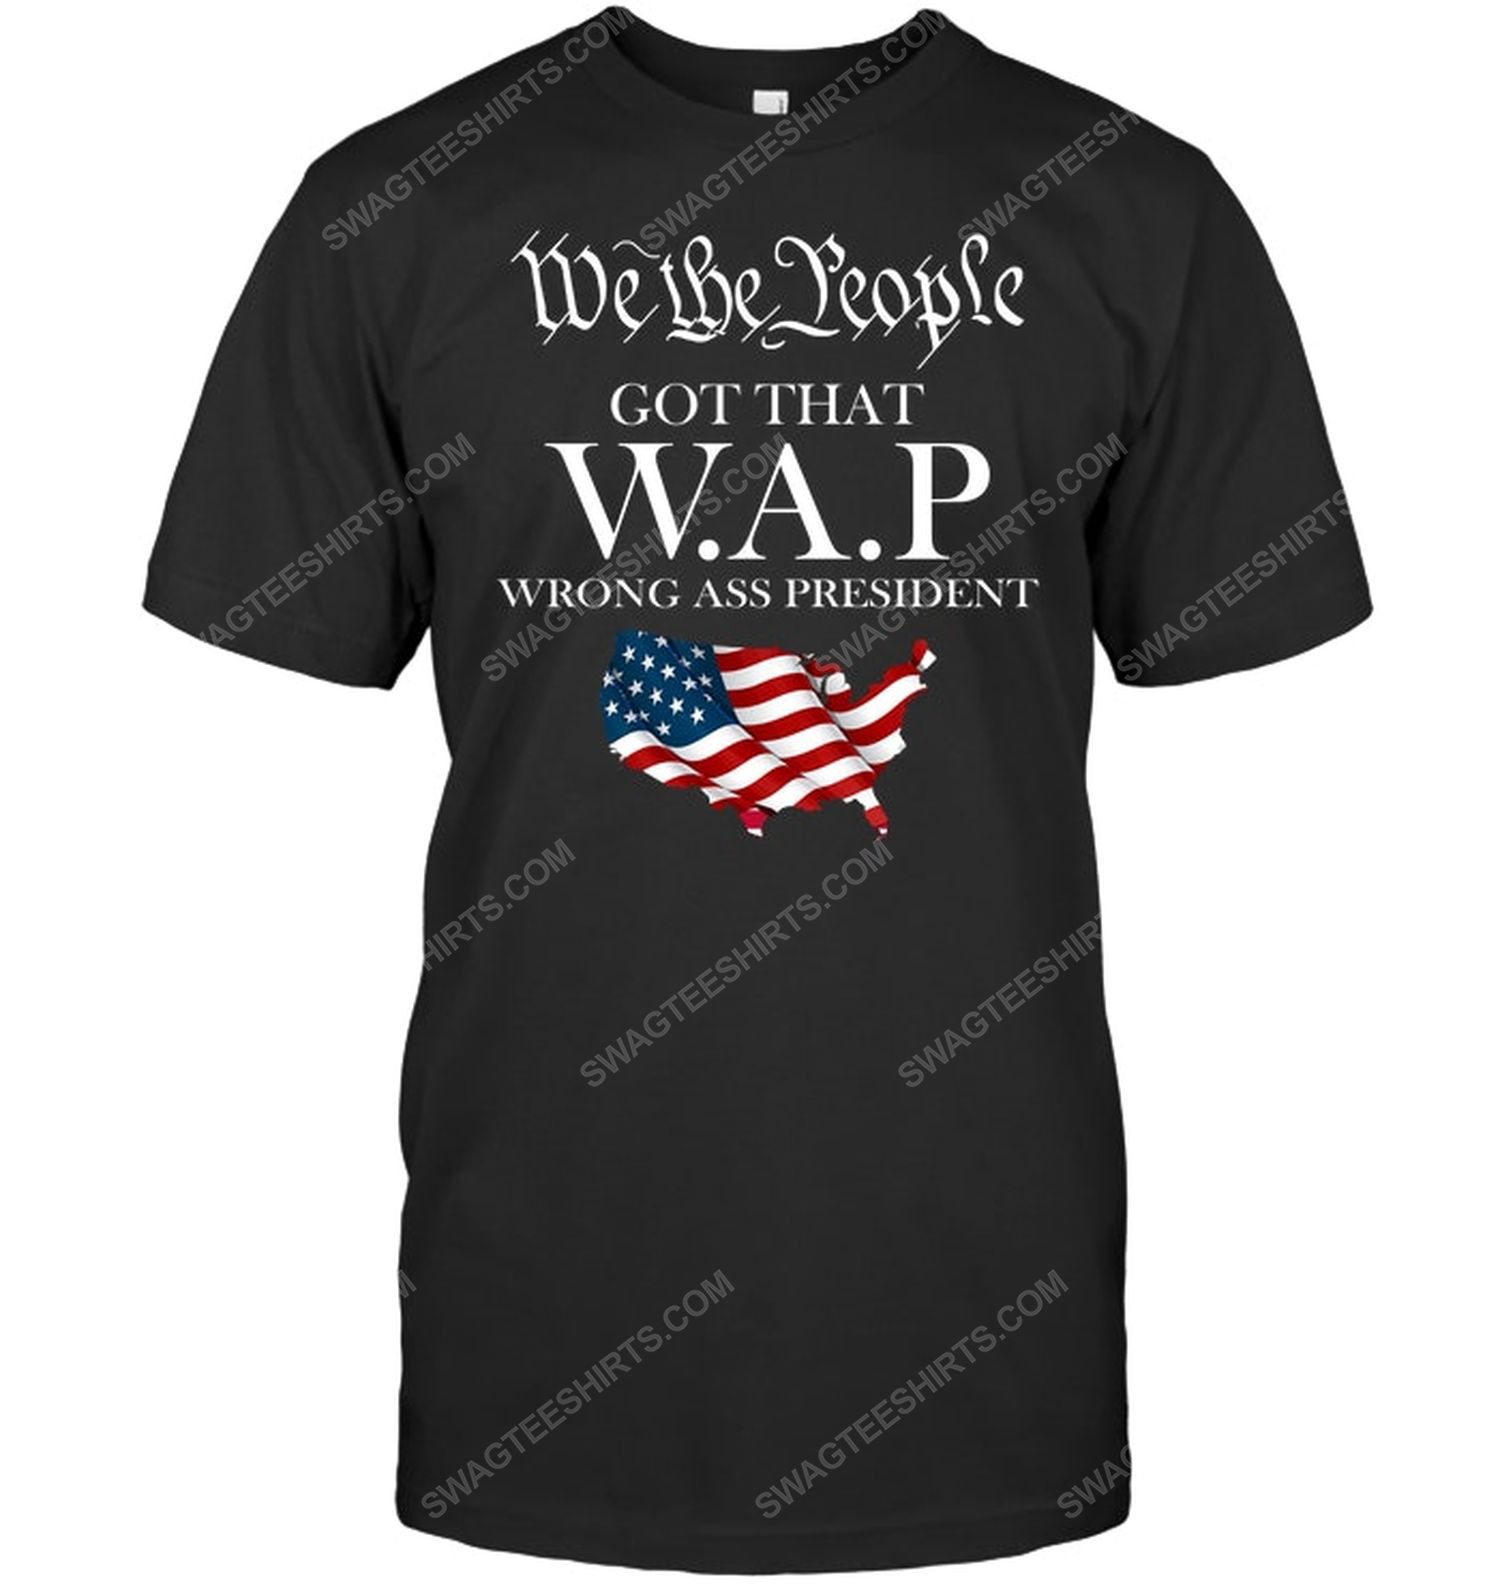 We the people got that wap wrong ass president political tshirt